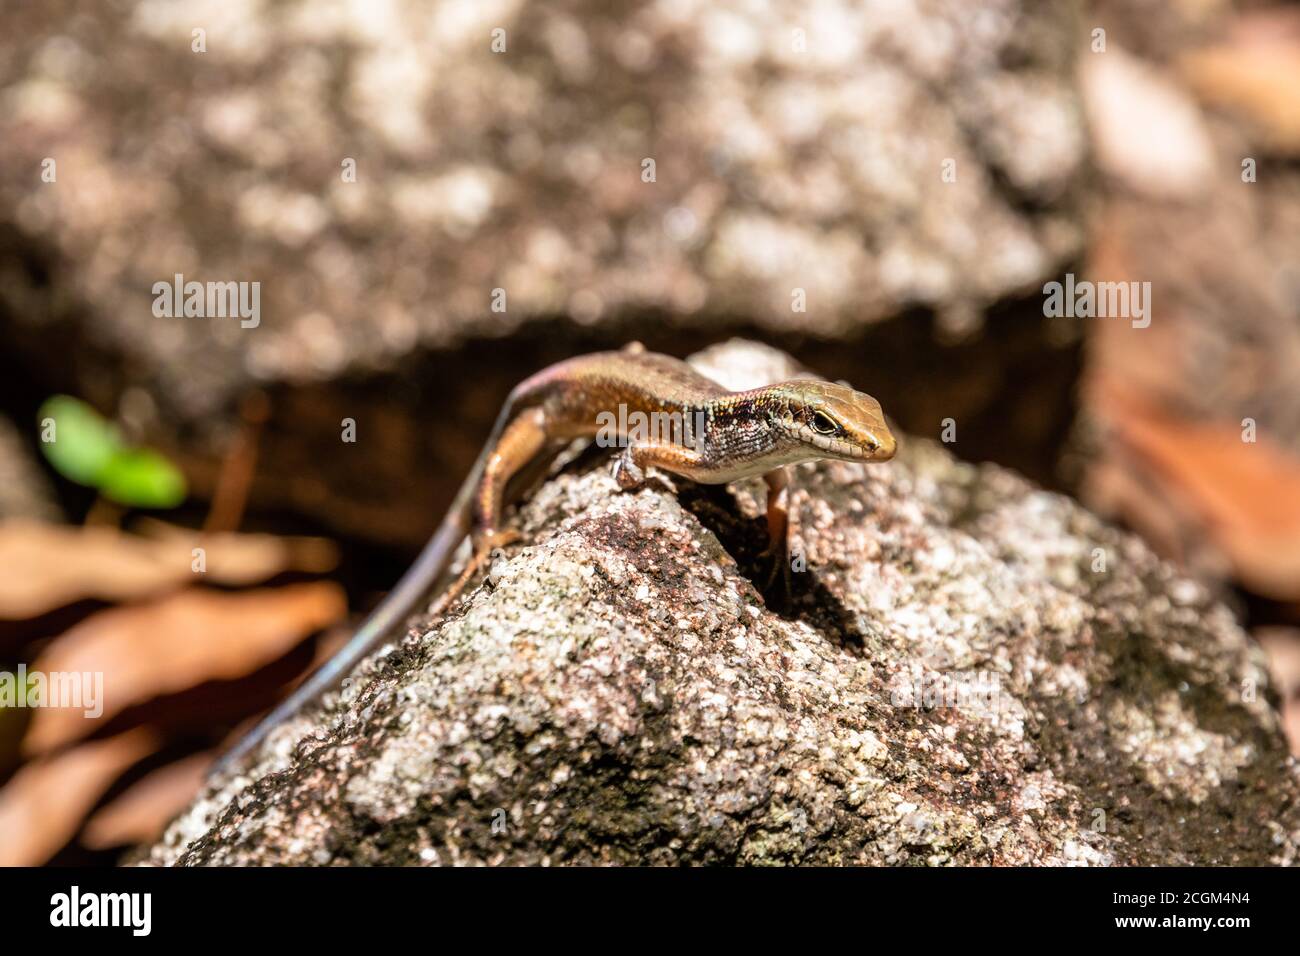 Carlia amax lizard in Fitzroy Island, Queensland, Australia Stock Photo